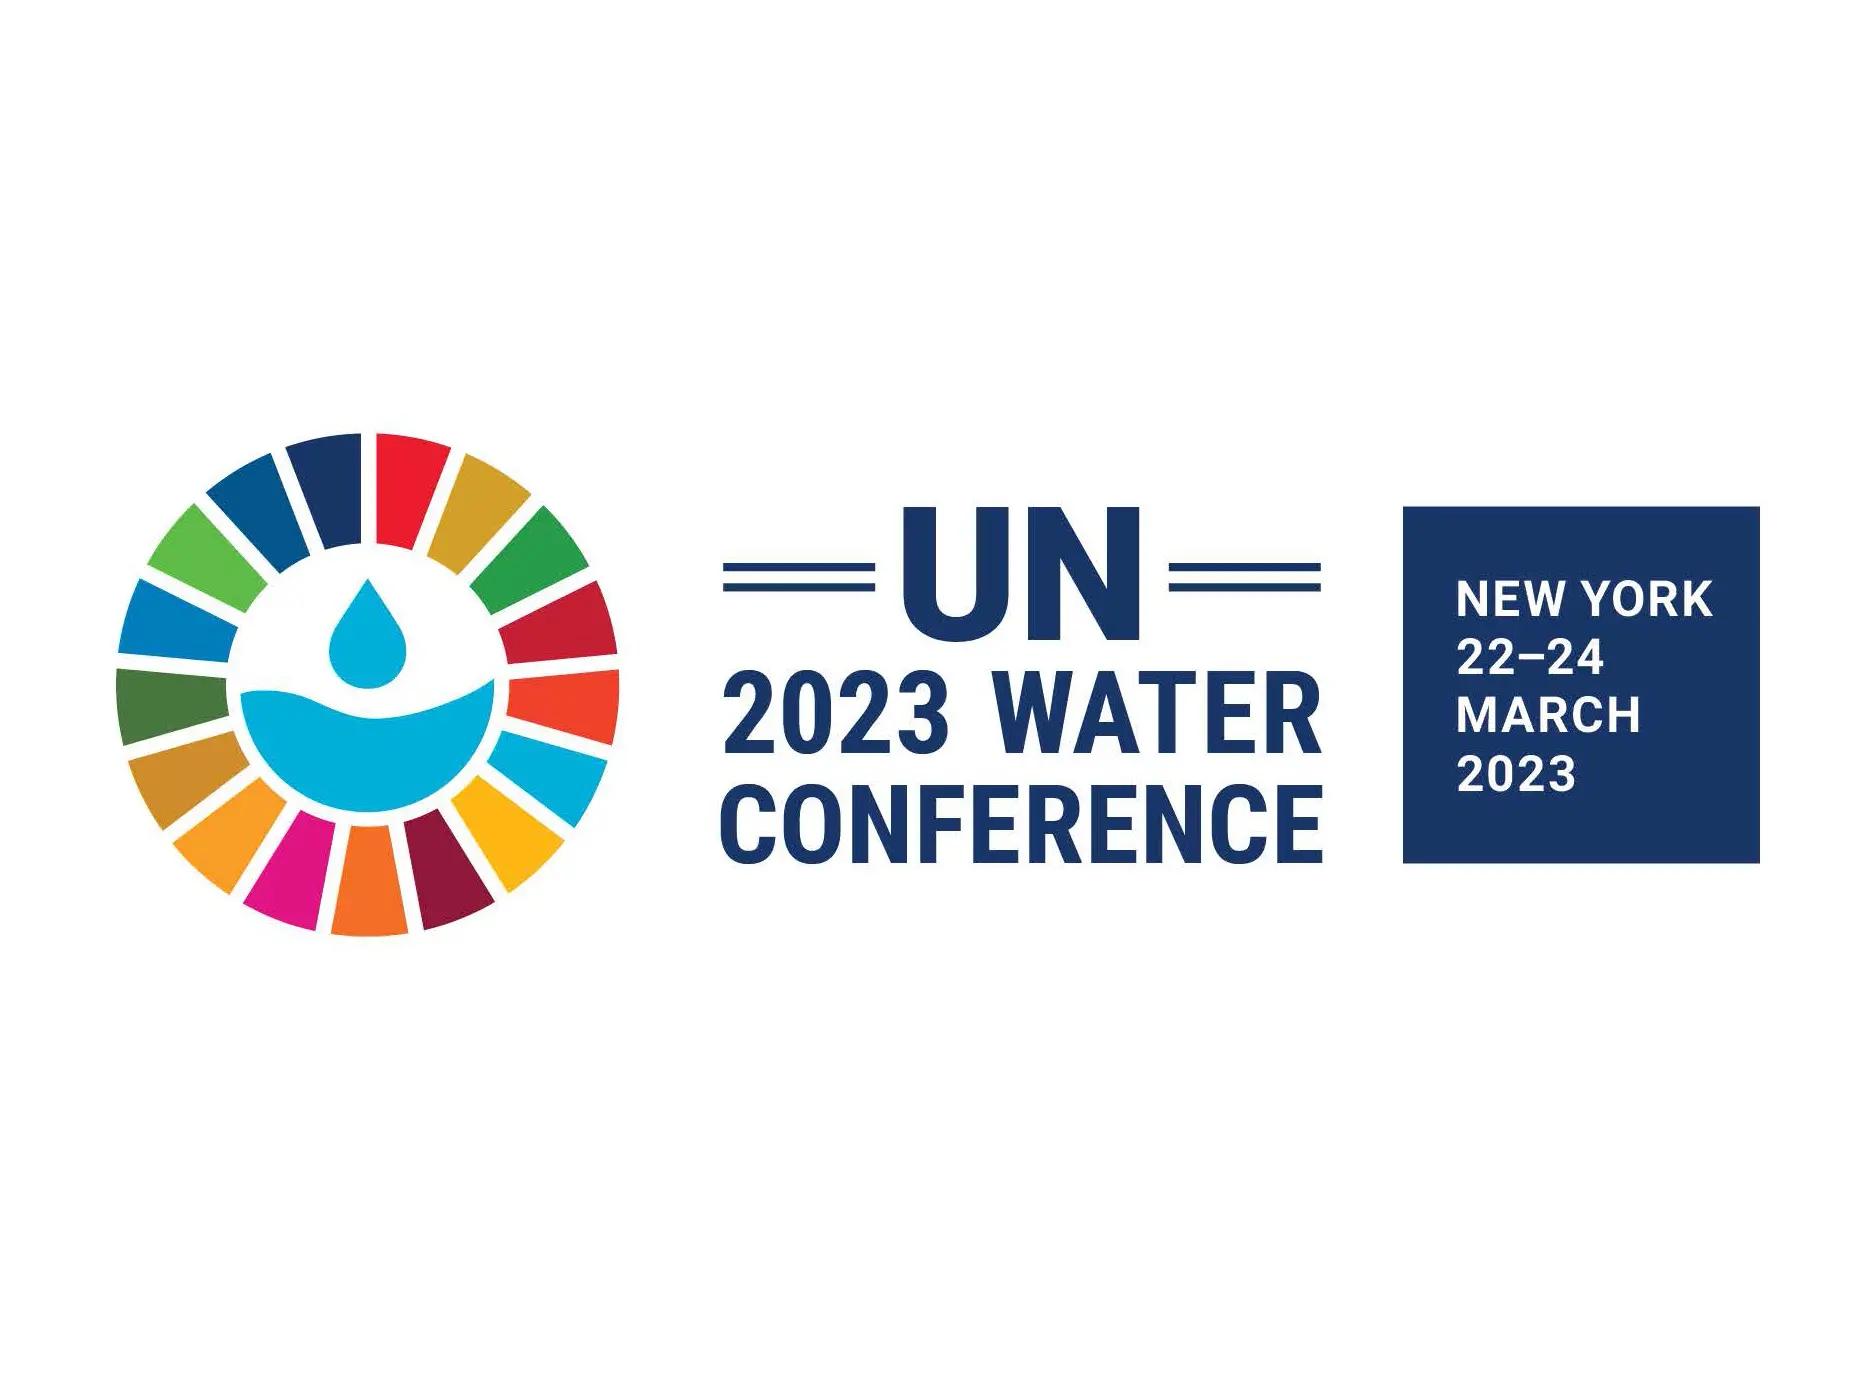 un2023_water_conference_logo_1.jpg